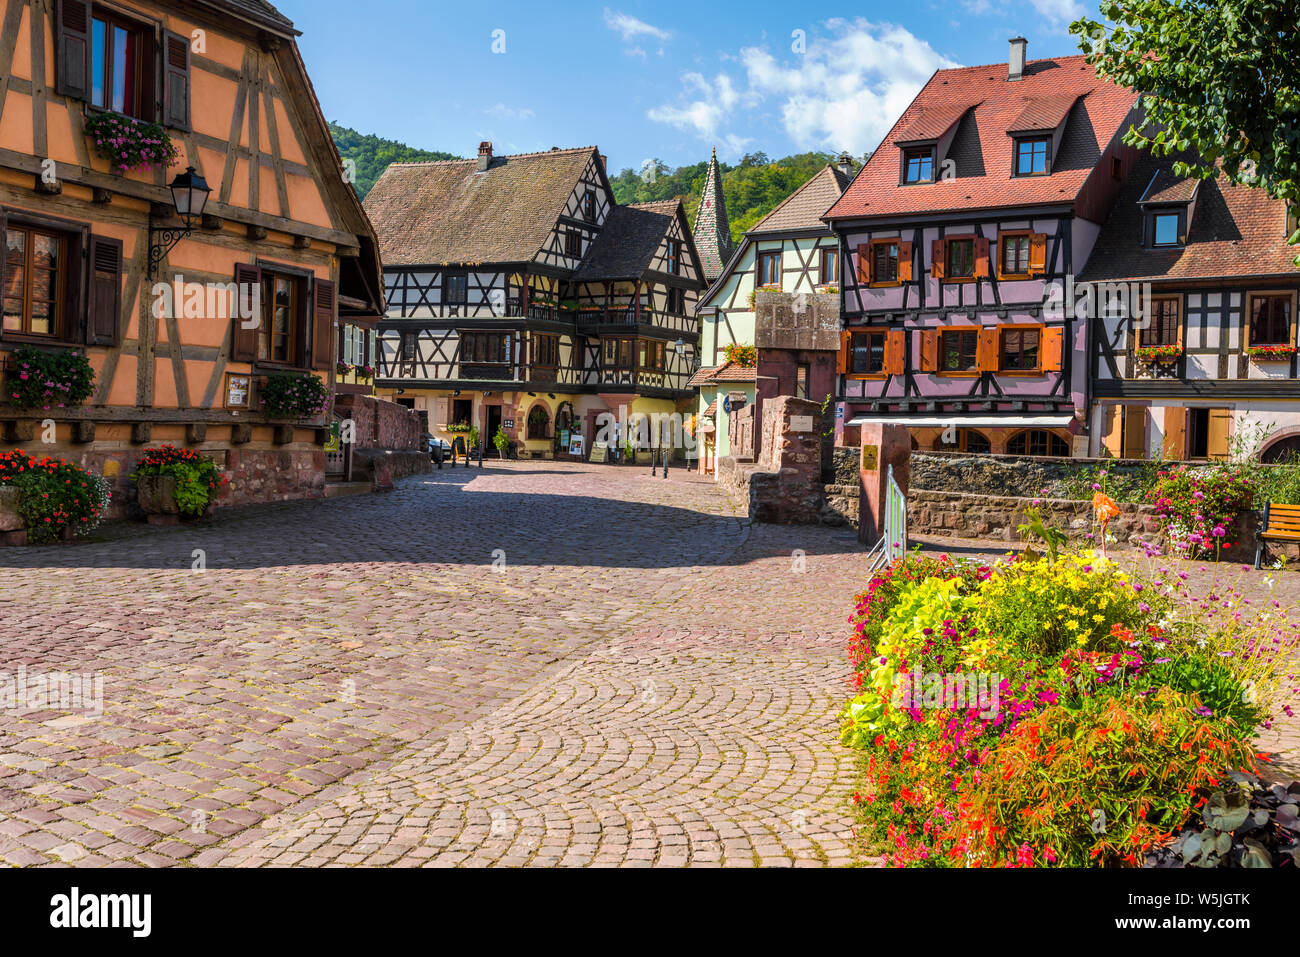 Pintoresco rincón del centro de Kaysersberg, Alsacia, Francia, casco antiguo con coloridas casas con entramados de madera y puente de piedra Foto de stock